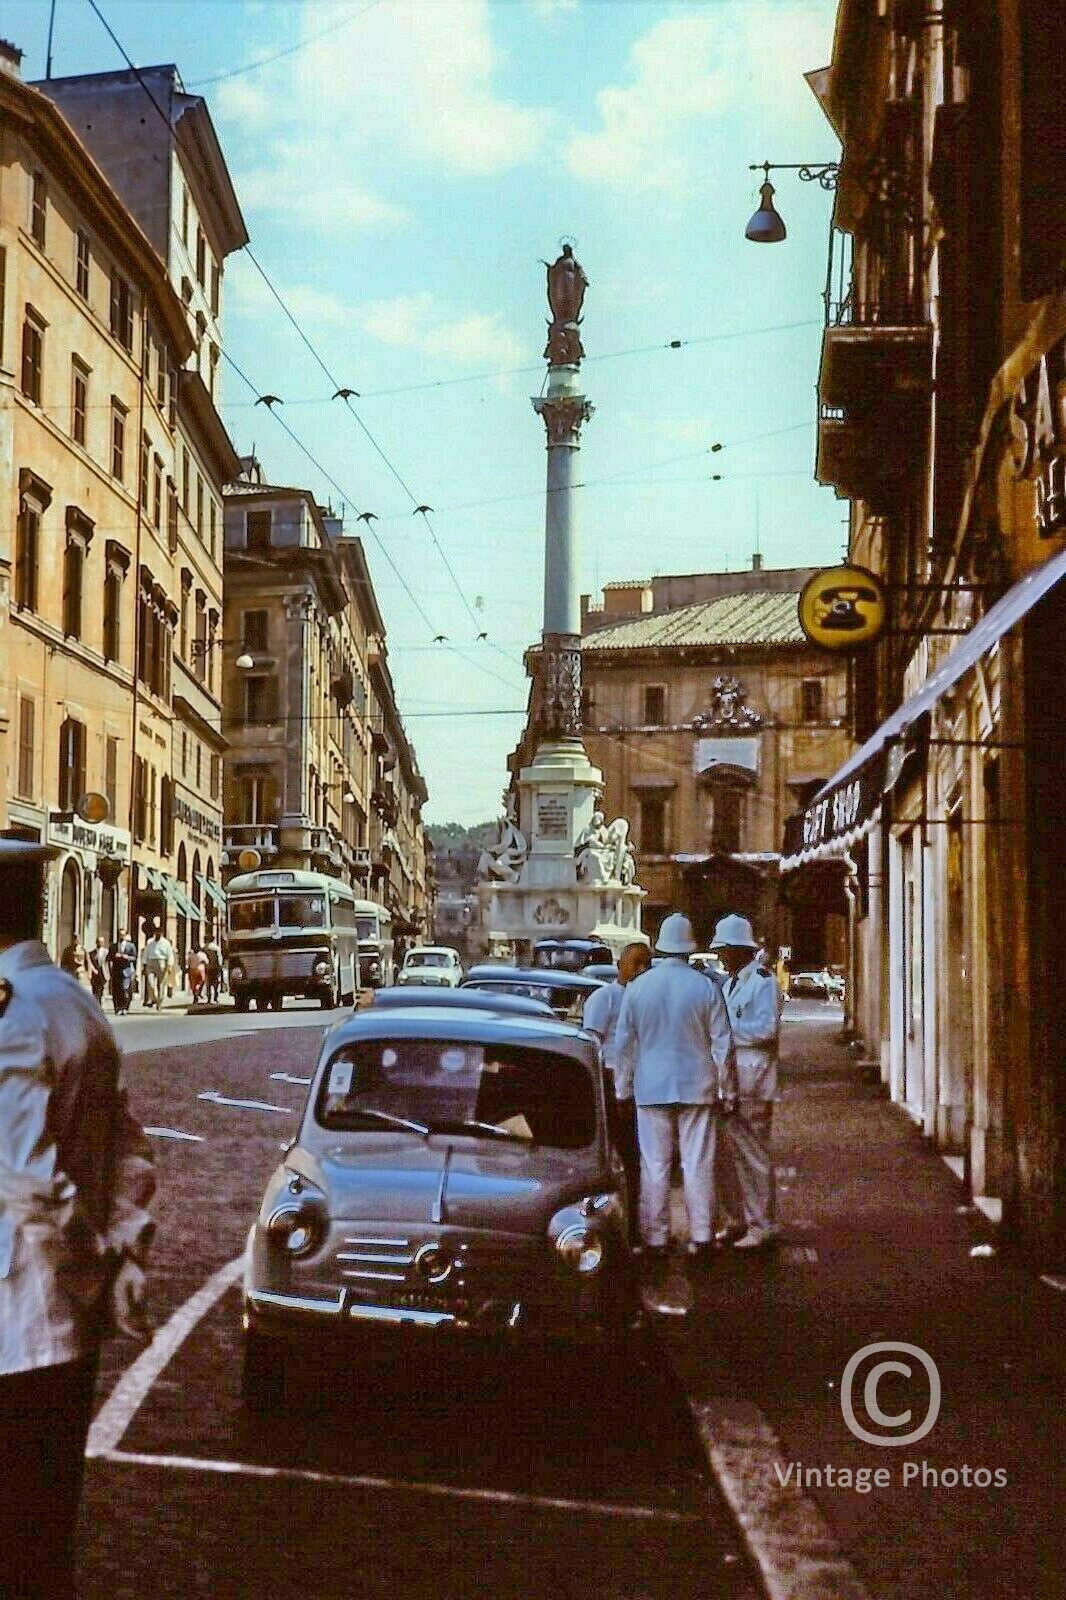 1960s Italian Street Scene, Cars & People